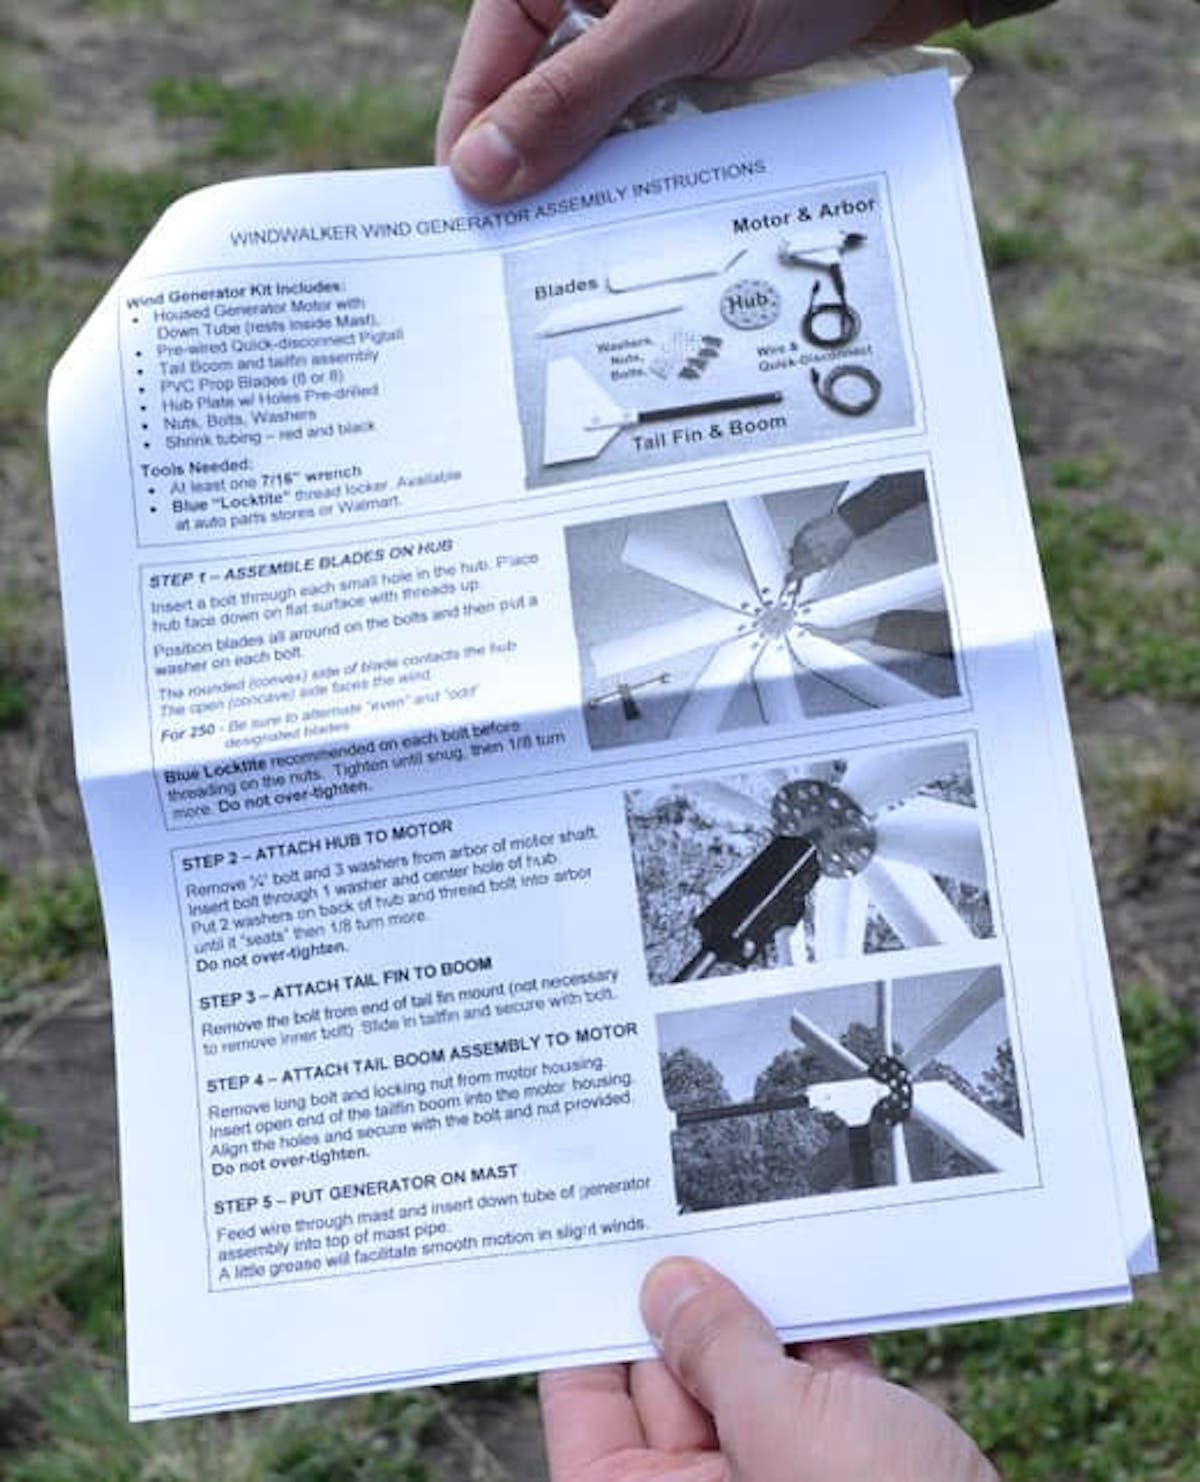 RV wind generator instruction manual